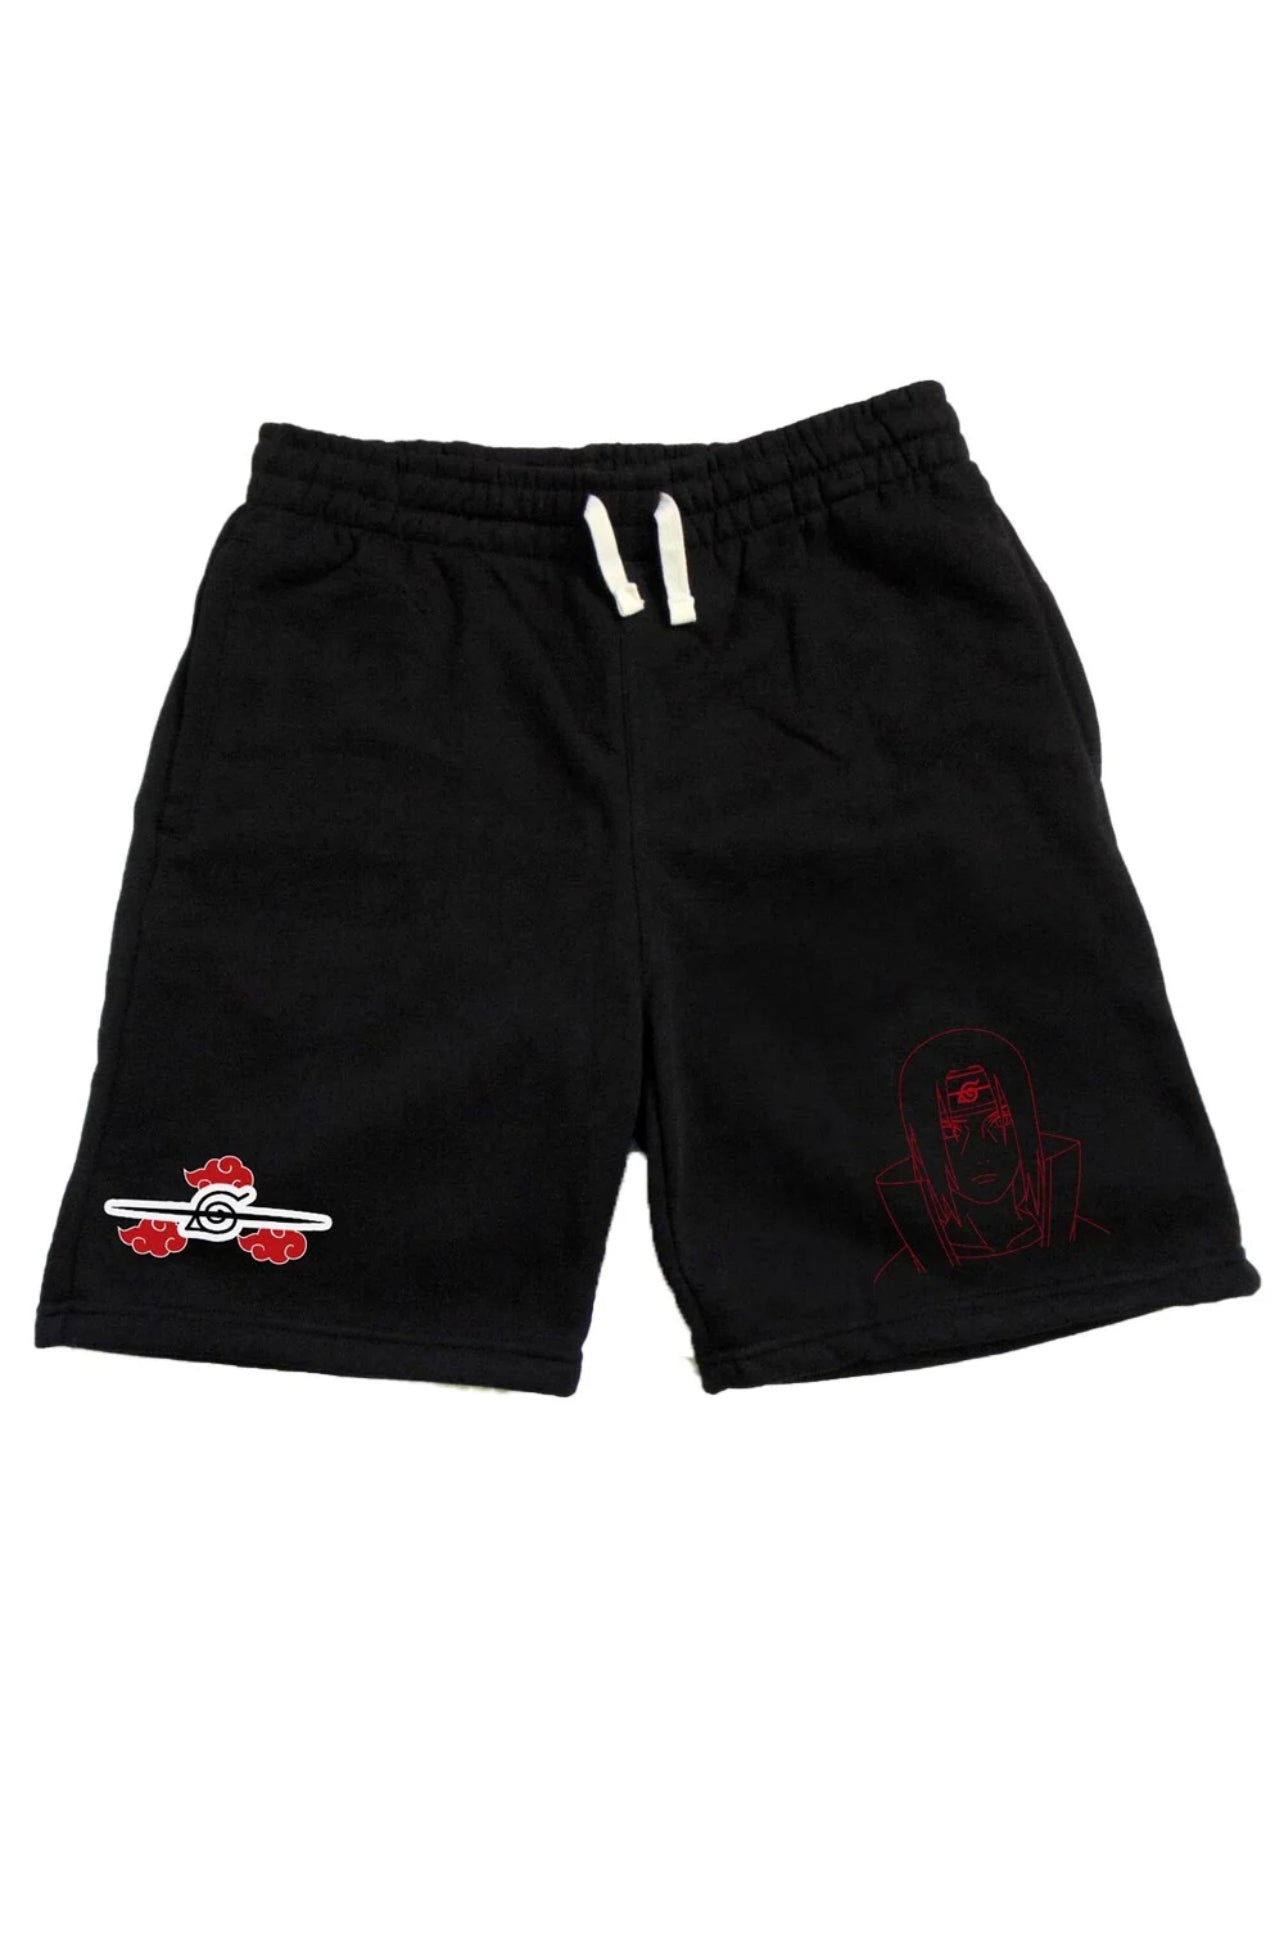 Black and Red Itachi Short